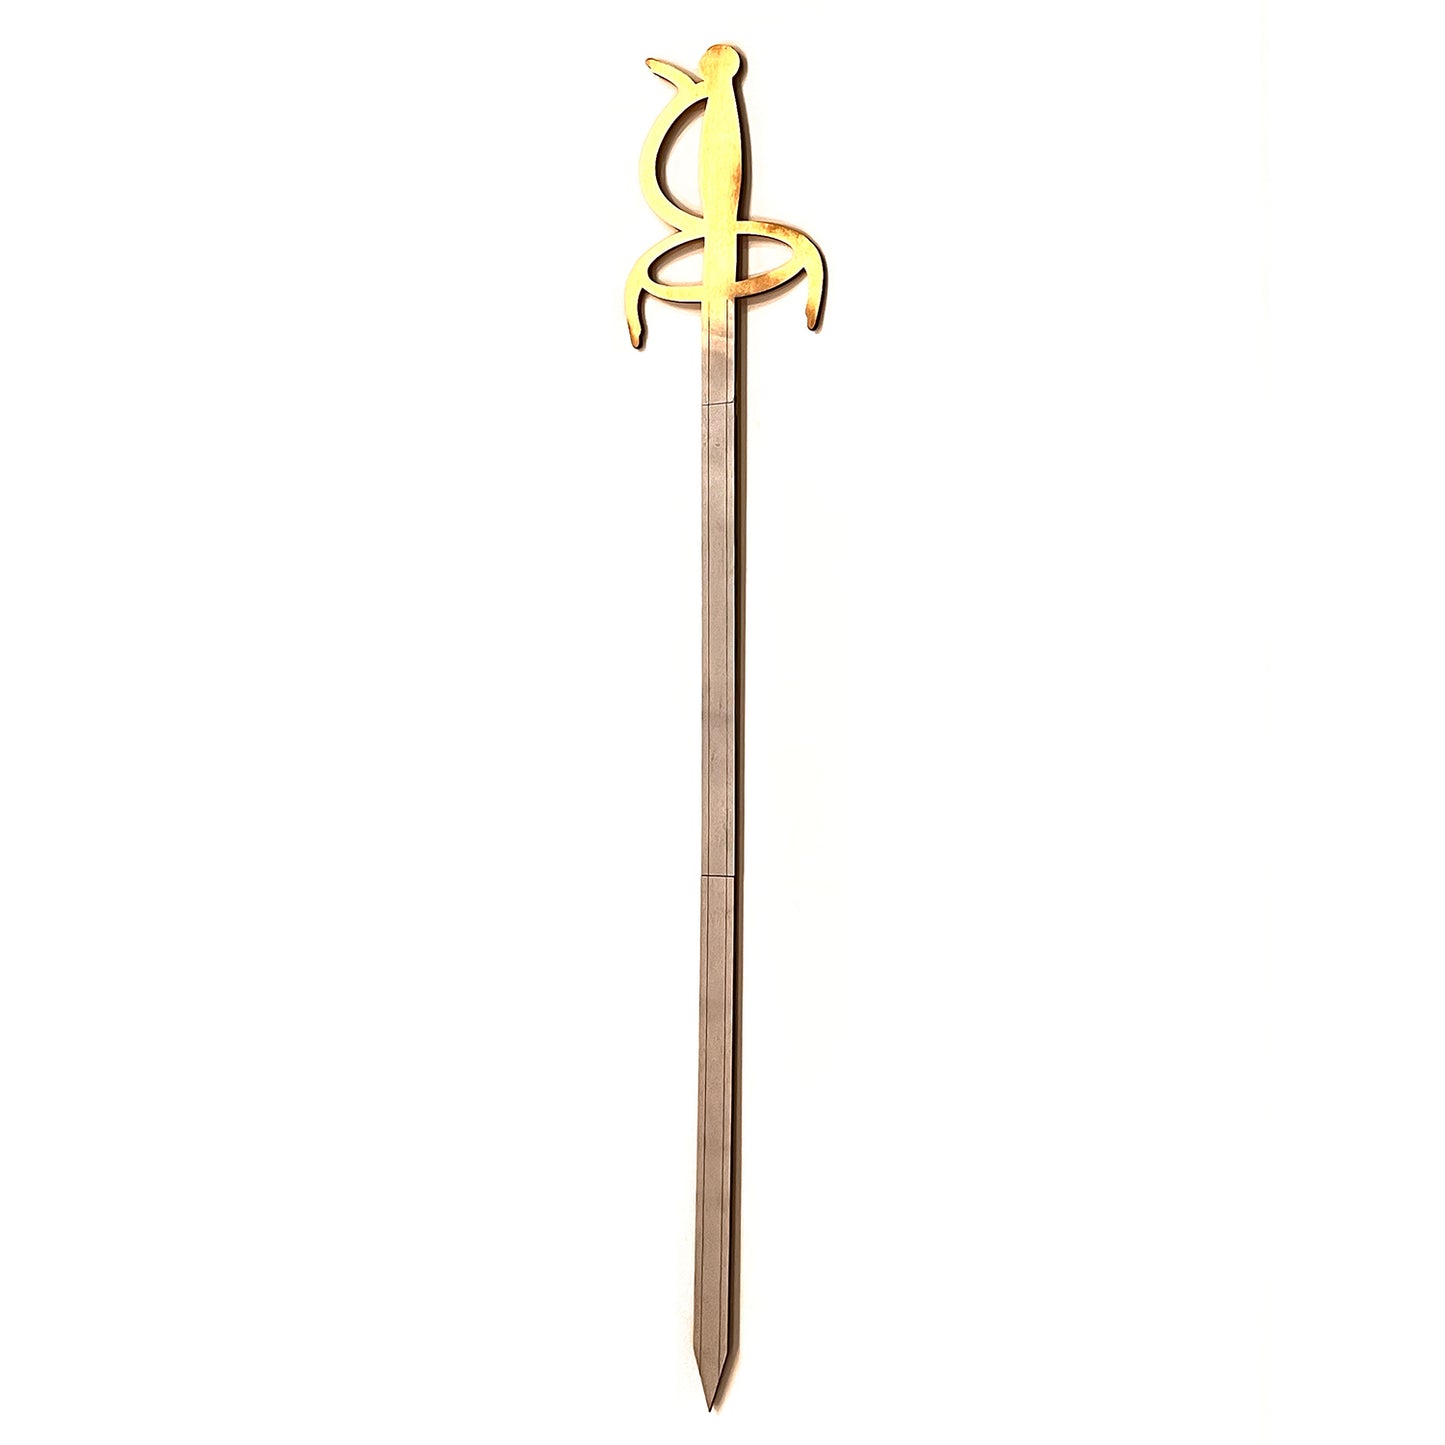 Wooden Decorative Sword - (segmented design) "Hello!"